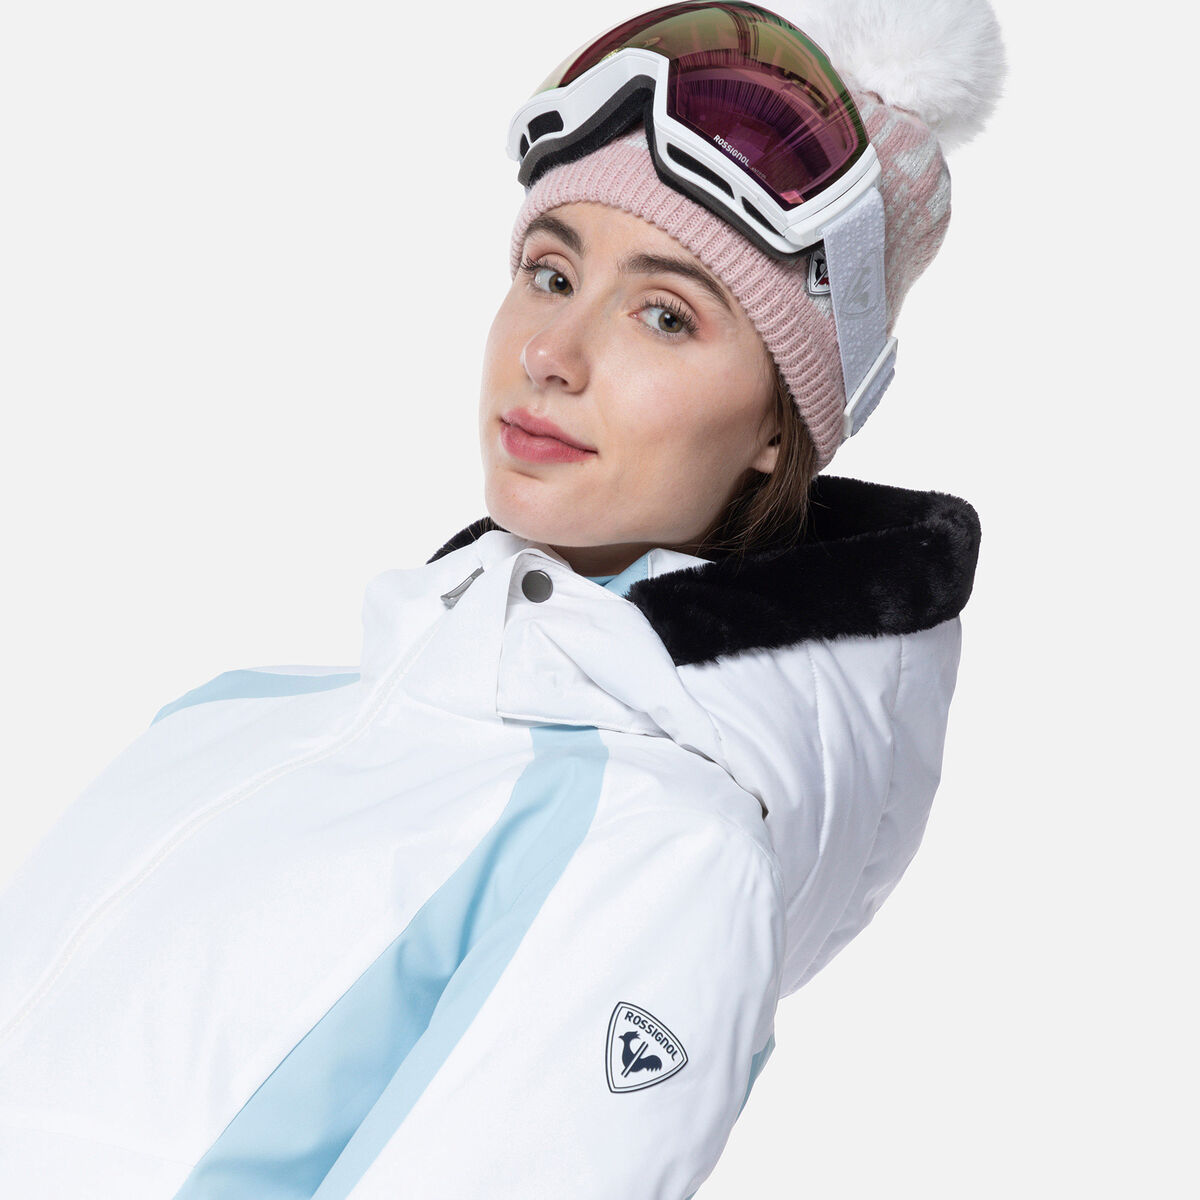 Rossignol Women's Controle Ski Jacket white